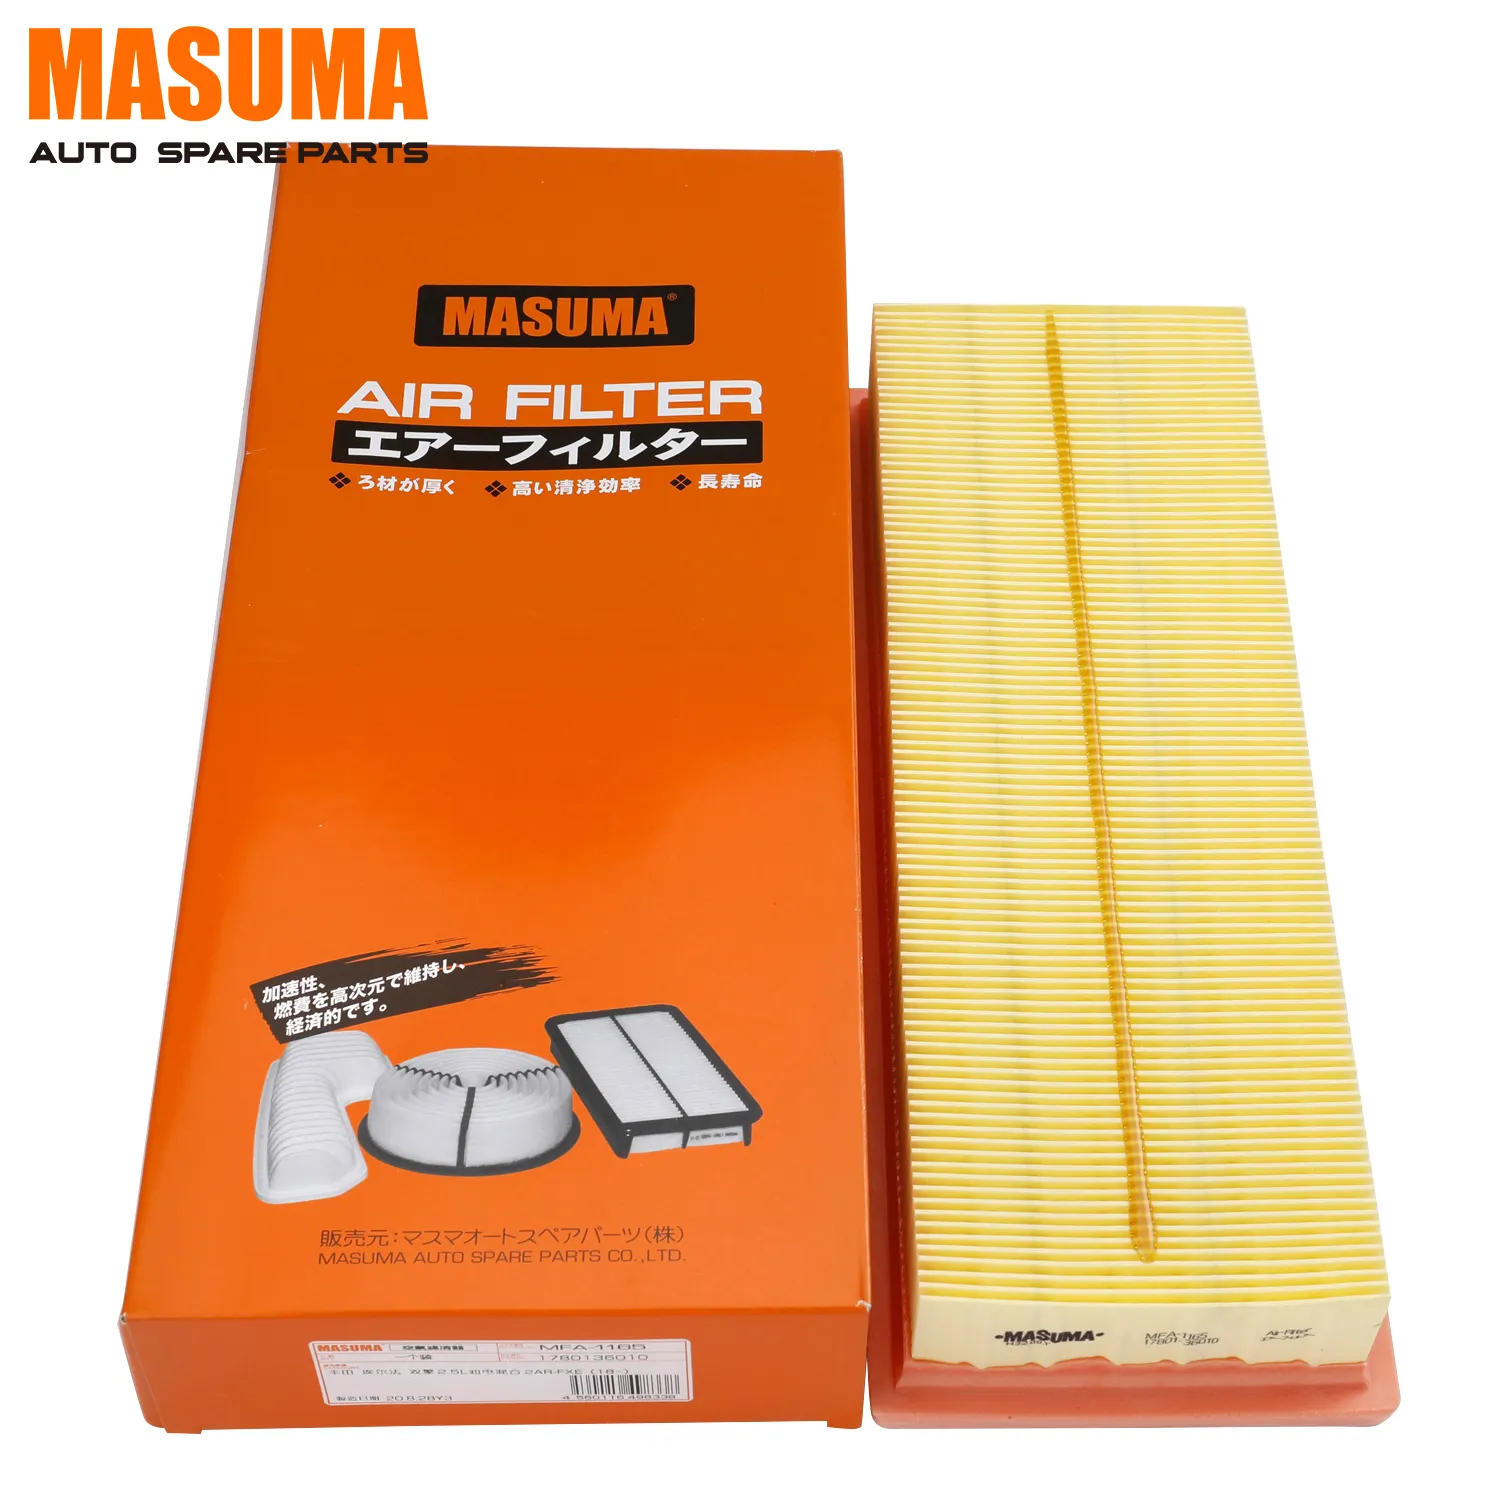 MFA-1165 MASUMA Auto CAR air filter manufacturers F16A 6G72 1780136010 17801-36010